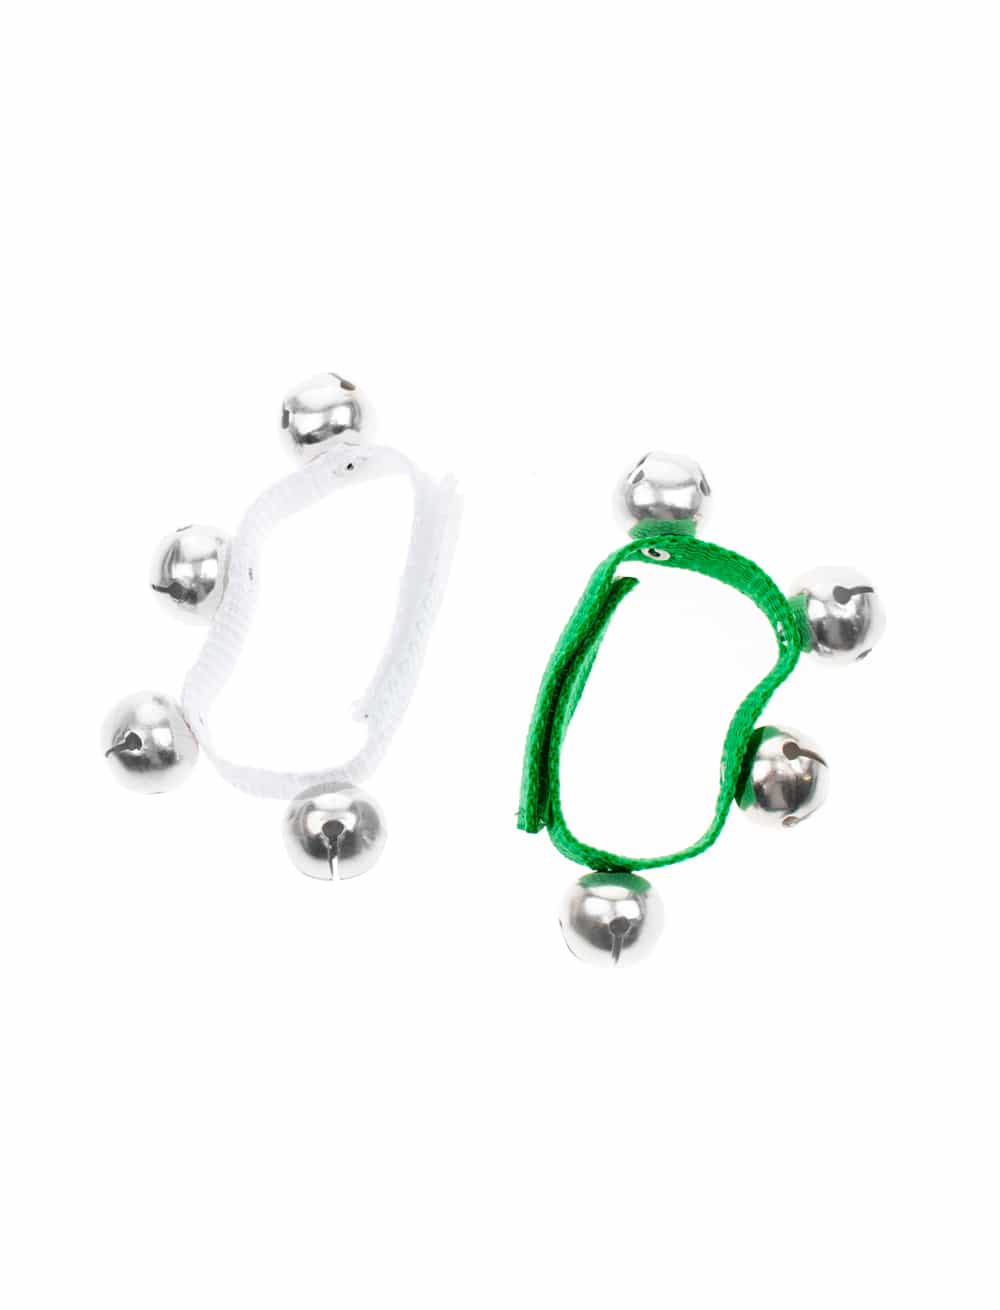 Schellenarmband grün/weiß